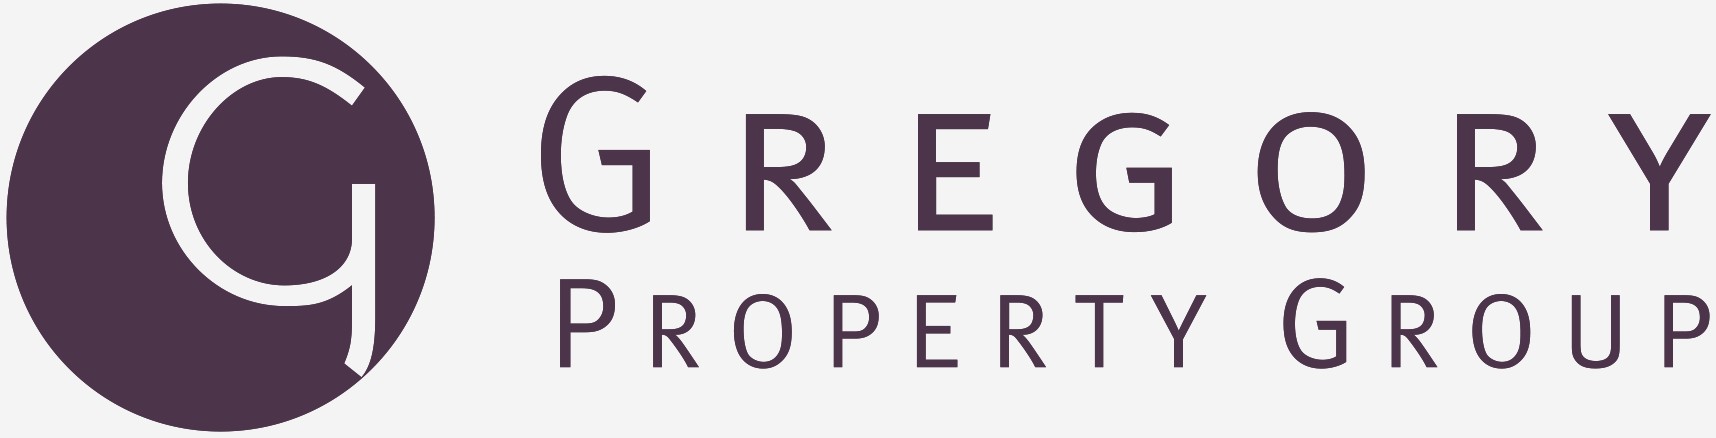 Gregory Property Group logo